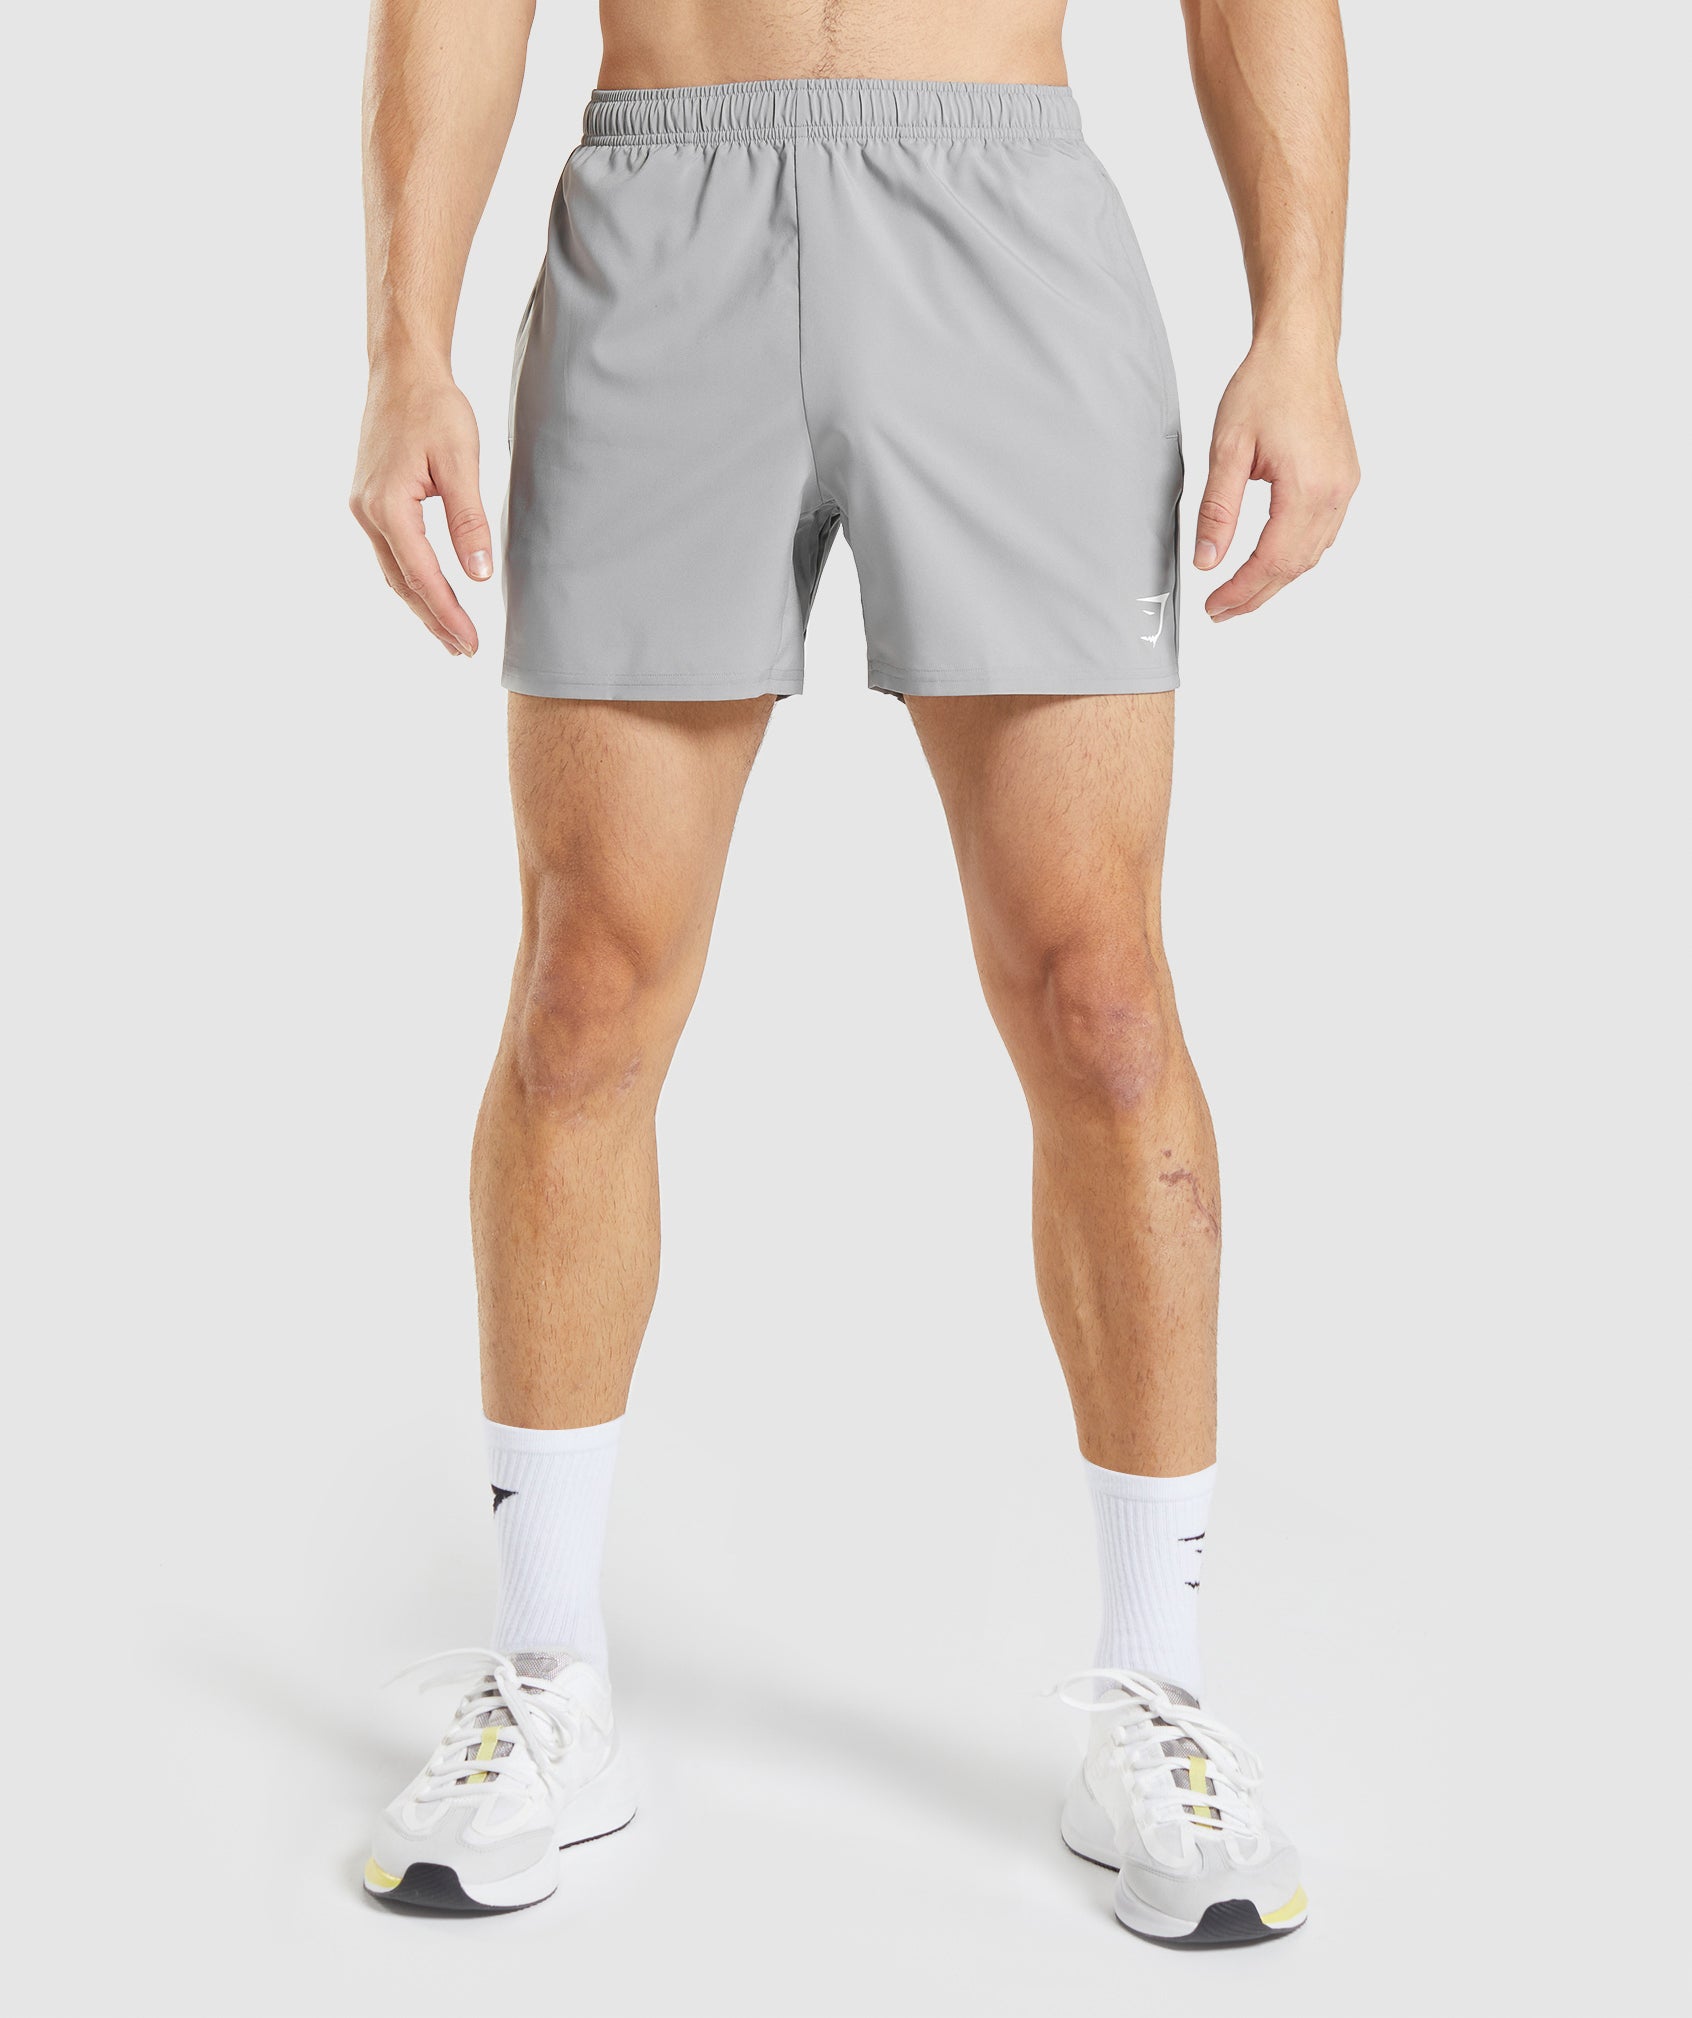 5 Inch Inseam Mens Shorts 